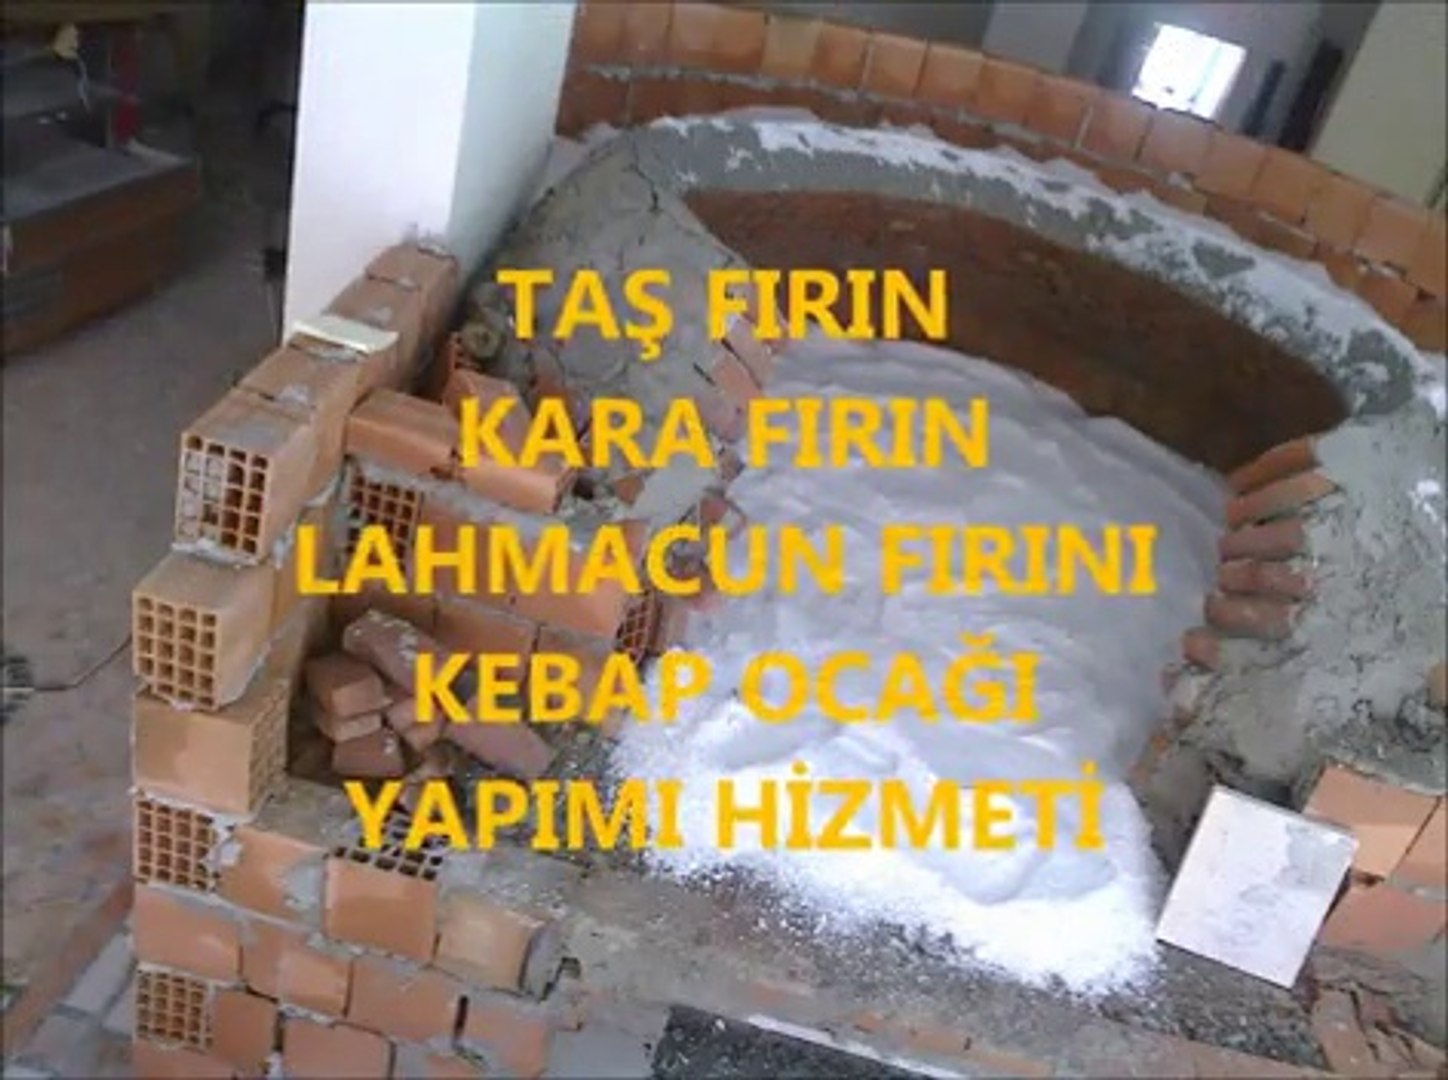 TAŞ FIRINI USTASI [Adana,Antalya,Burdur,Mersin,Isparta,K.Maraş] -  Dailymotion Video